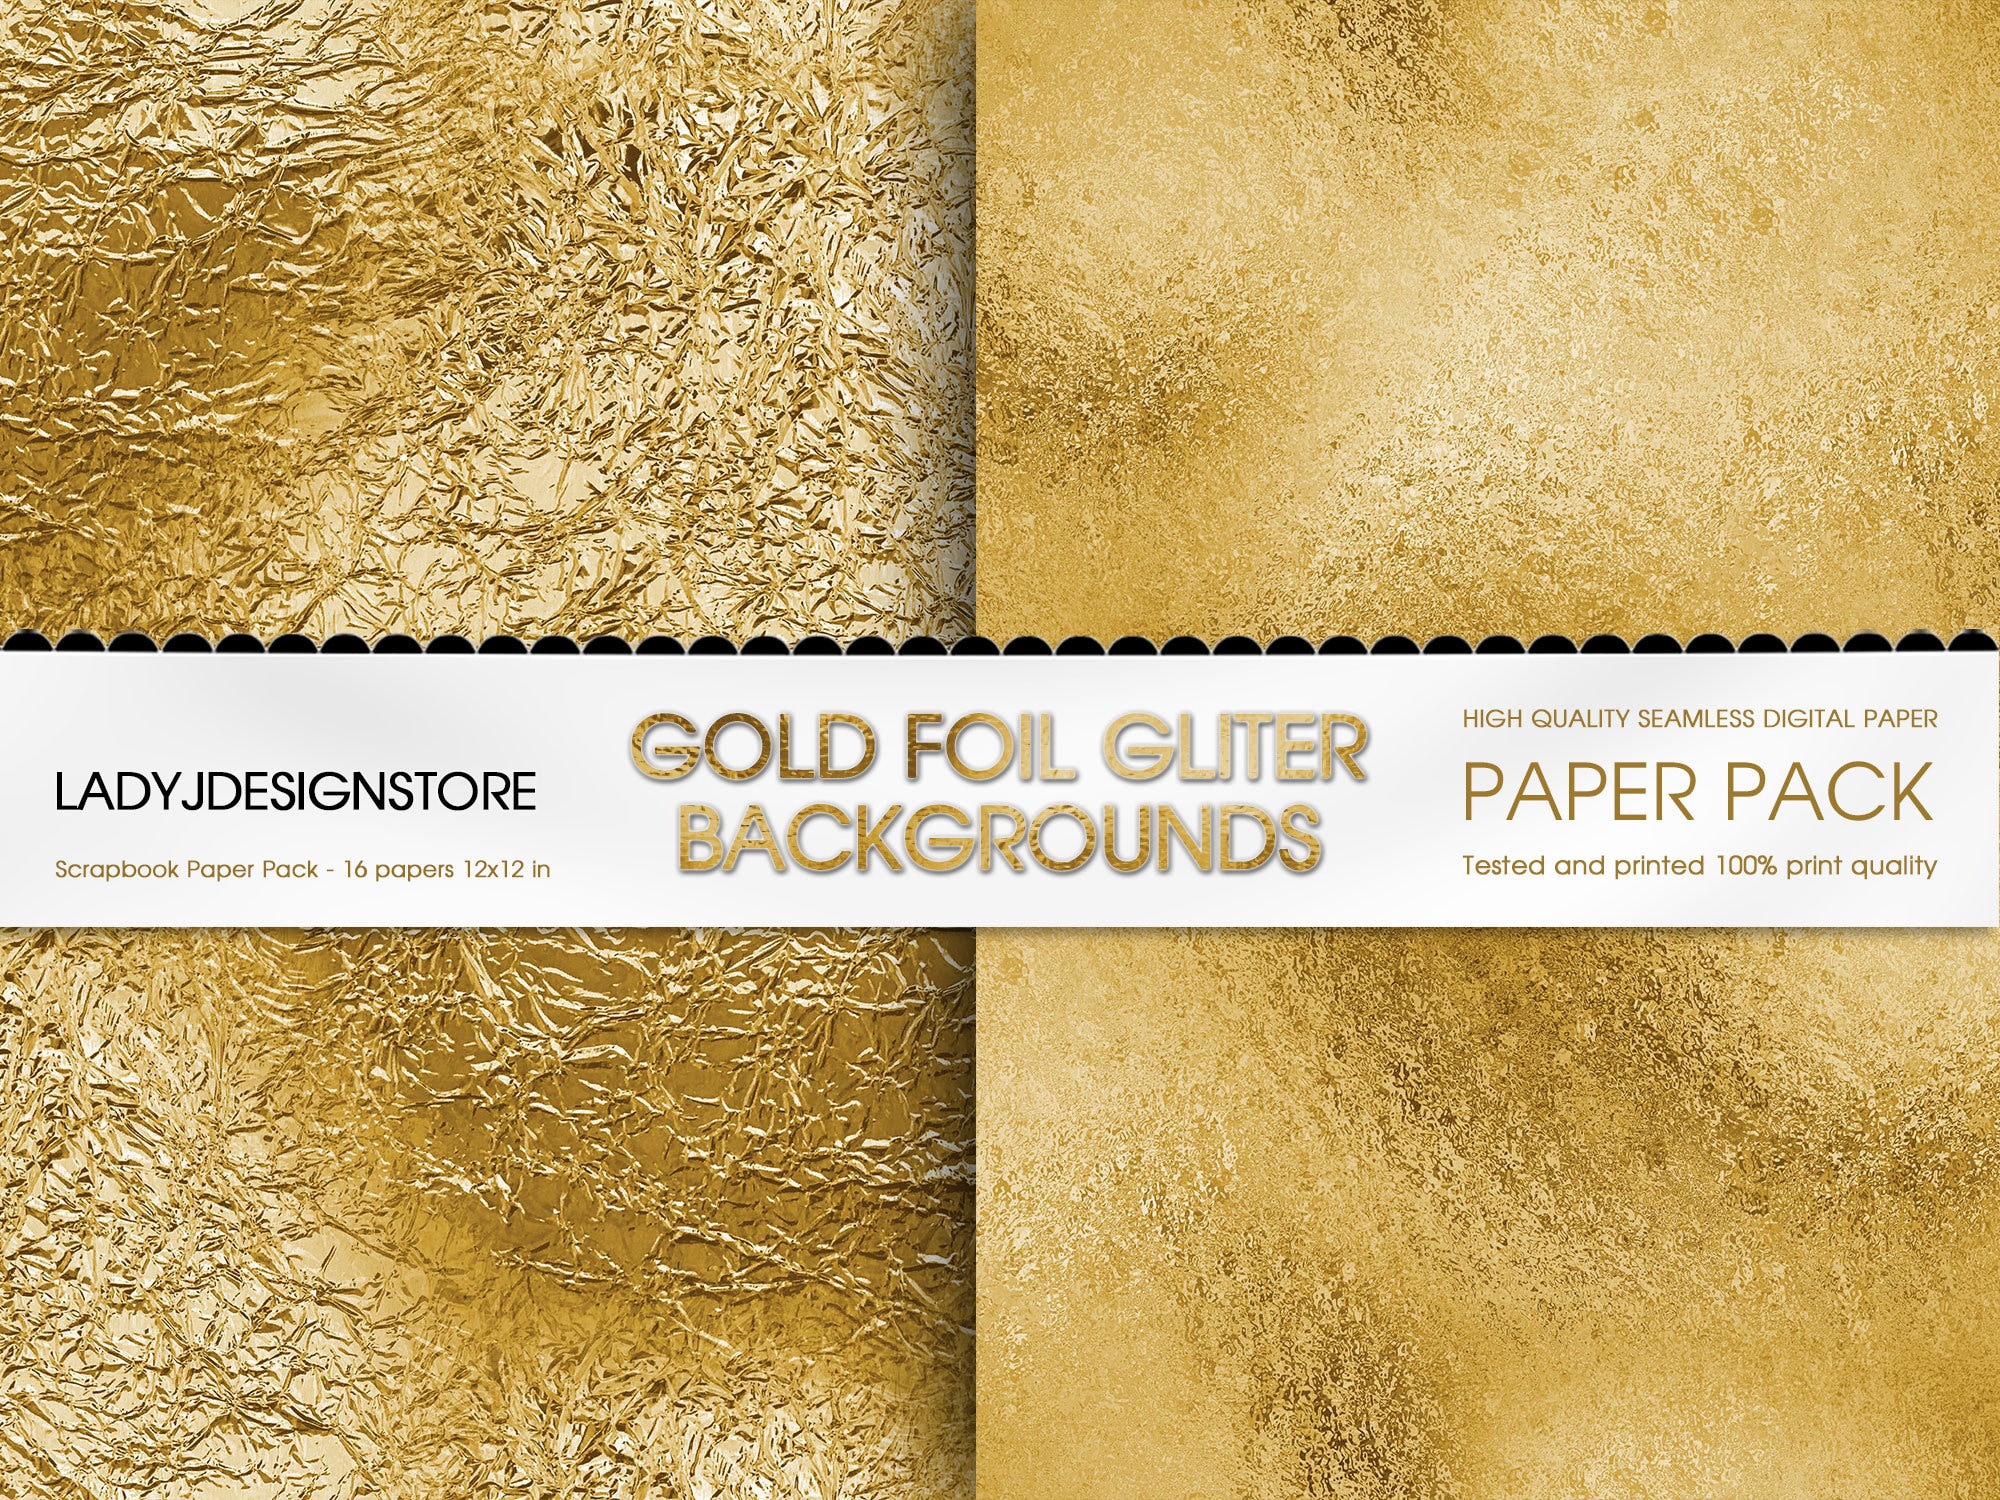 Gold Digital Paper, Gold Foil Digital Paper, Gold Foil, Scrapbook Paper,  Foil, Gold Digital Paper, Metallic Gold, Brushed Gold, DOWNLOAD 